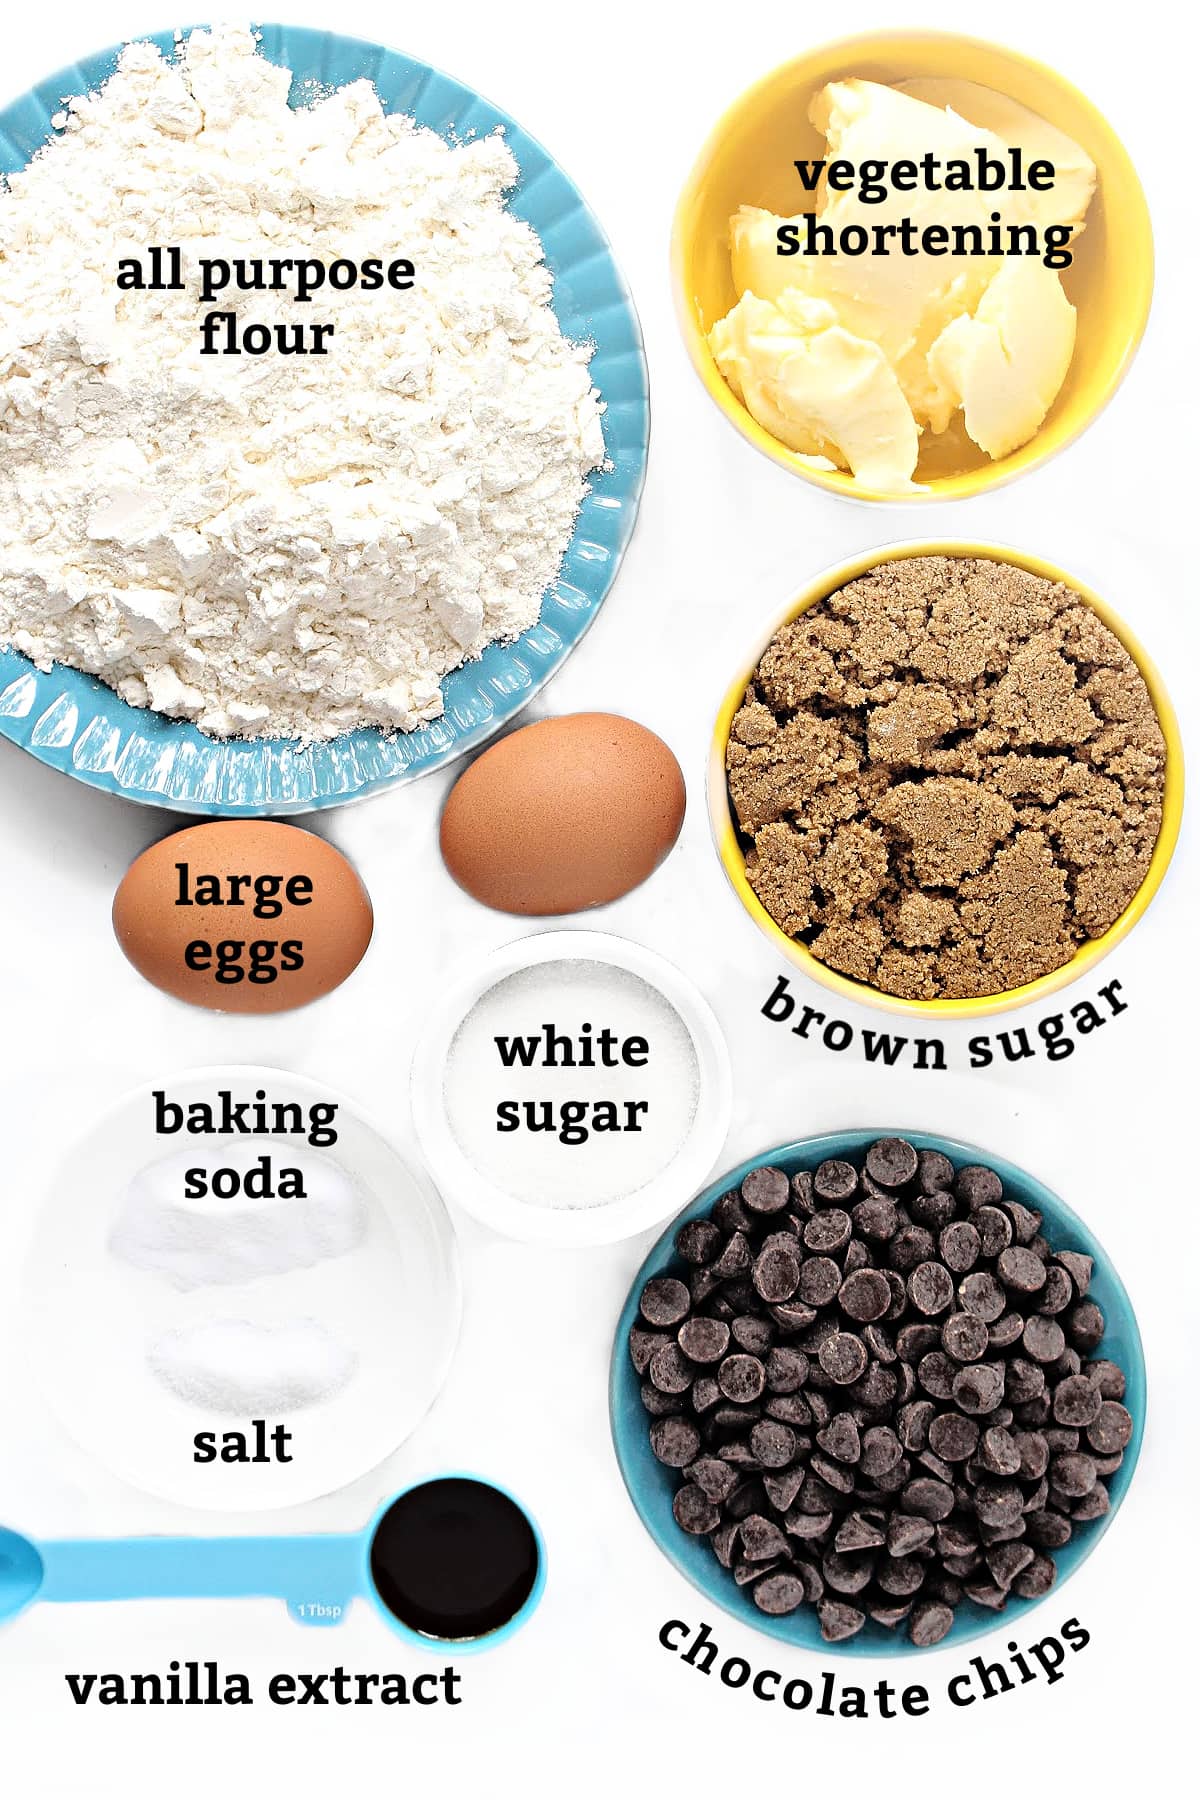 Ingredients: flour, vegetable shortening, large eggs, brown sugar, white sugar, baking soda, salt, chocolate chips, vanilla.